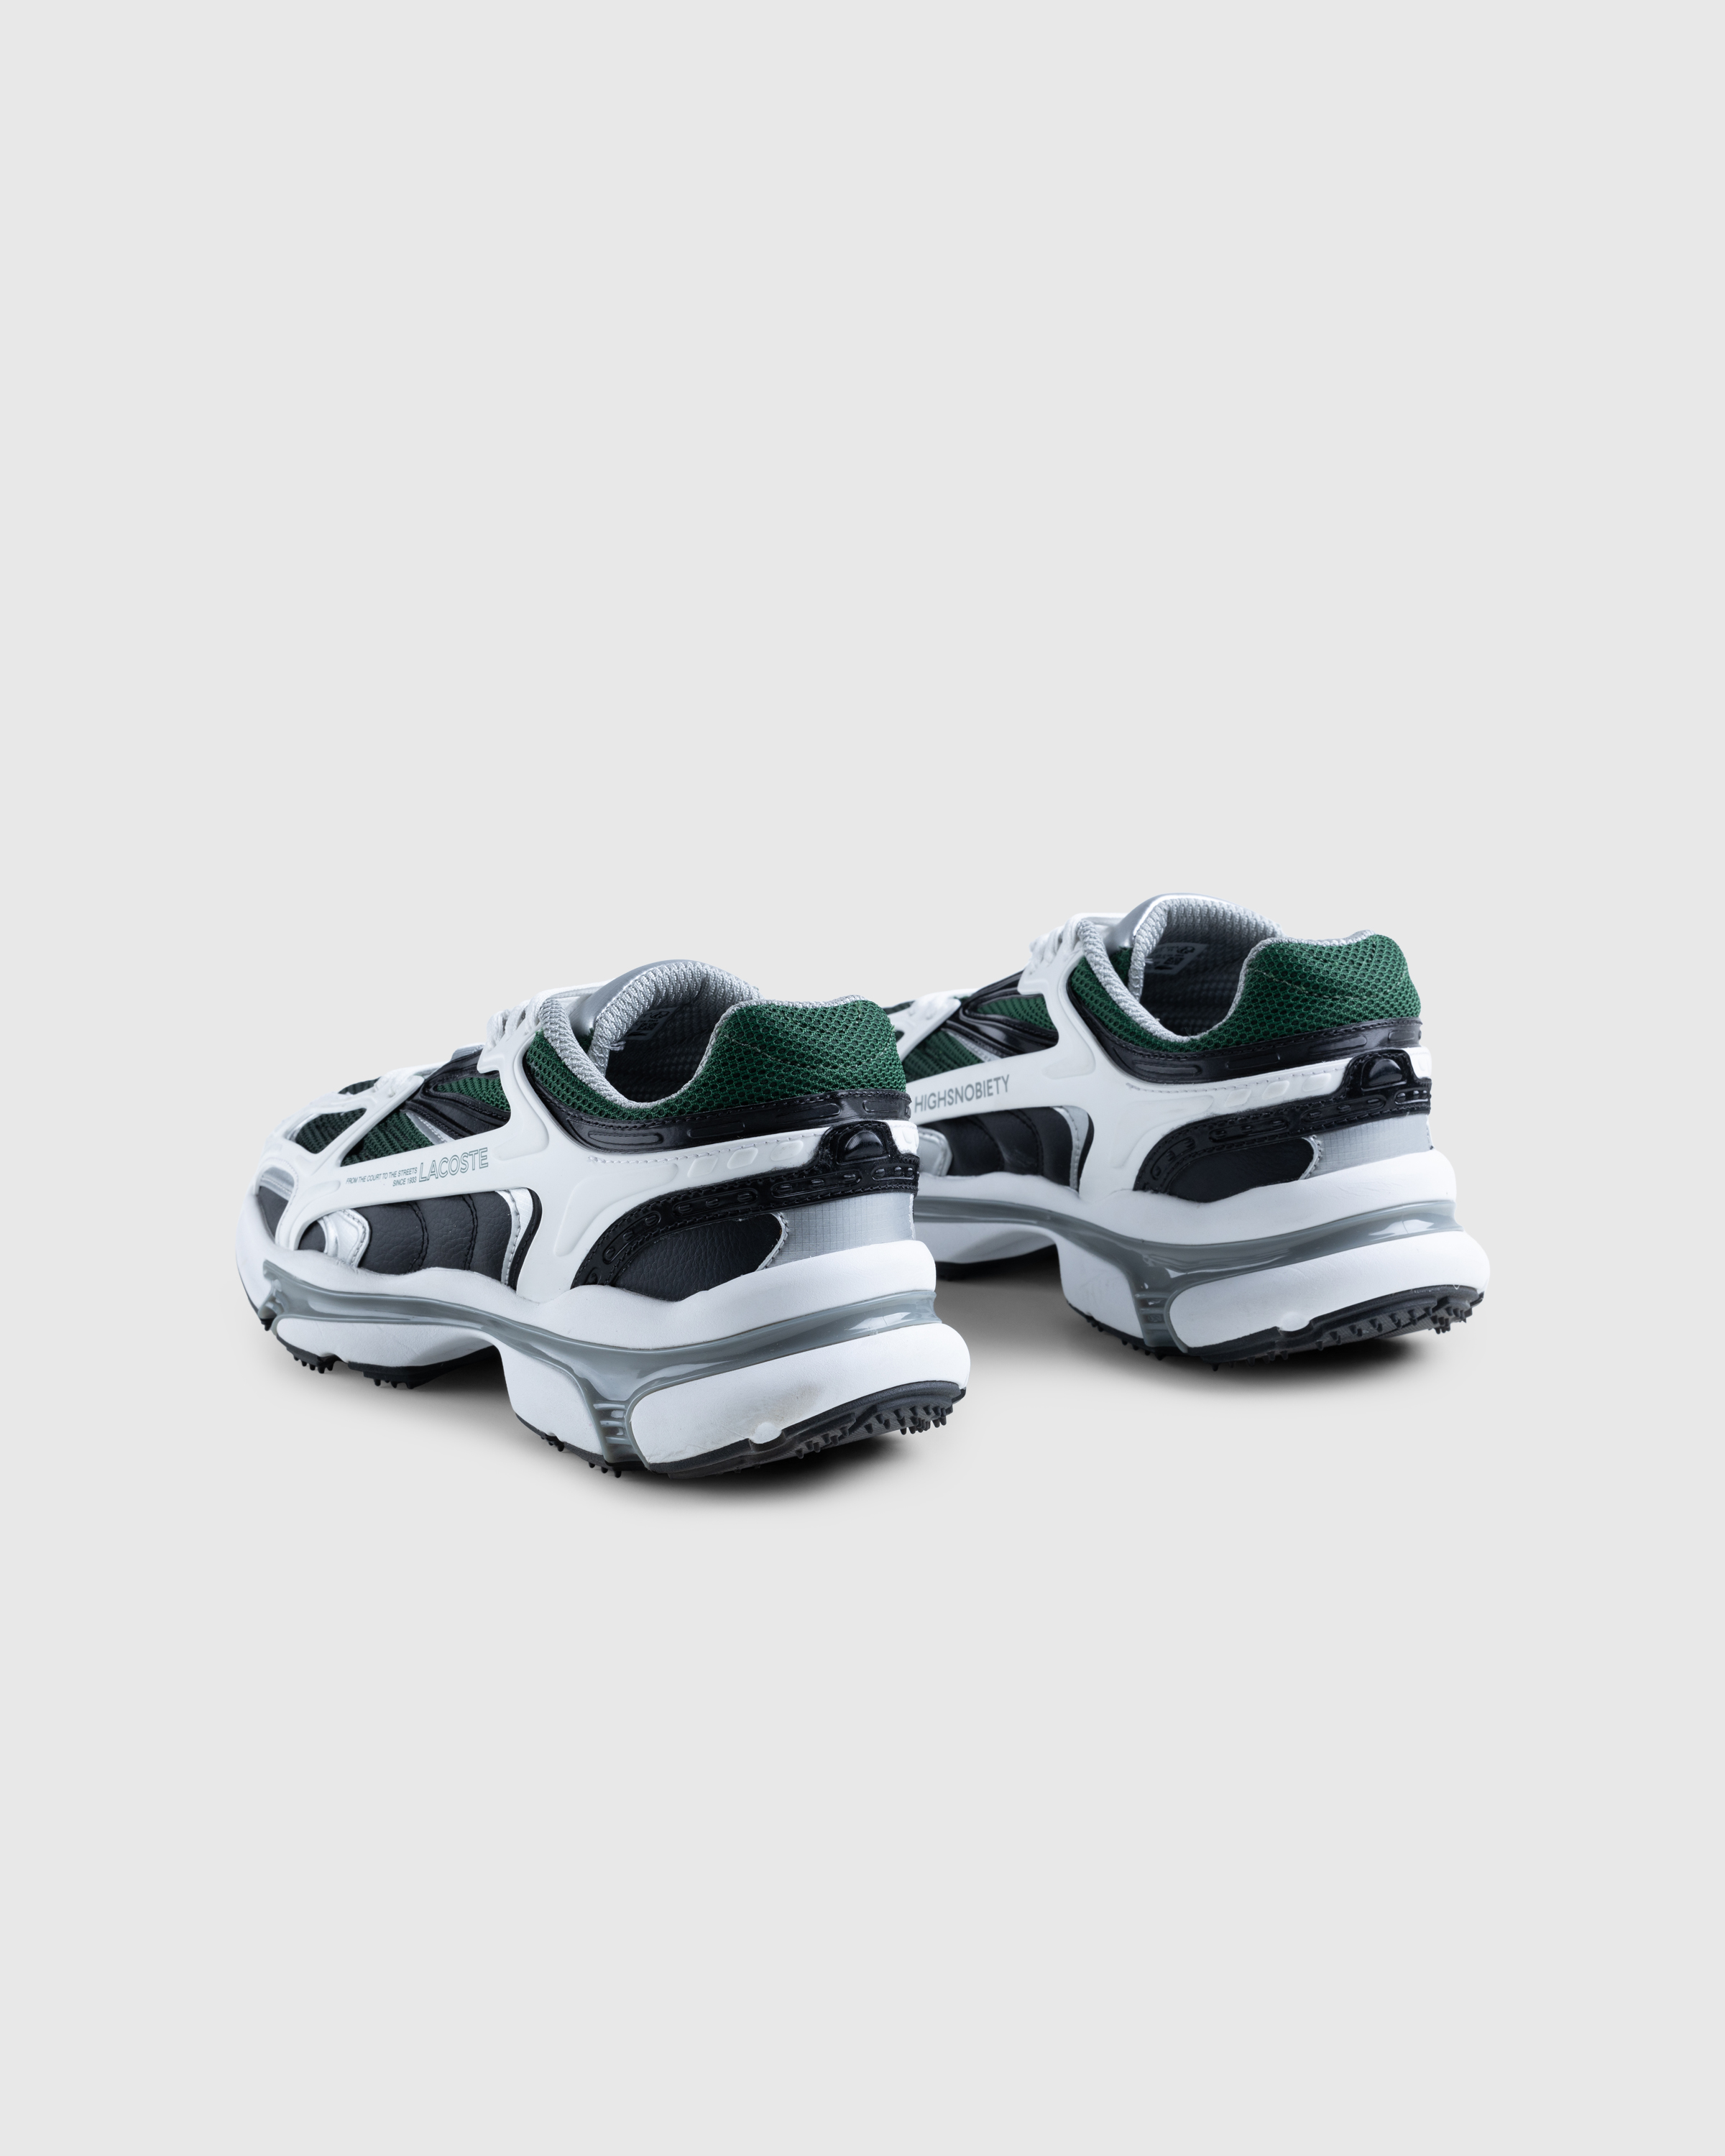 Lacoste x Highsnobiety – L003 2k24 (W) "Not In Paris" Multi - Low Top Sneakers - Green - Image 4